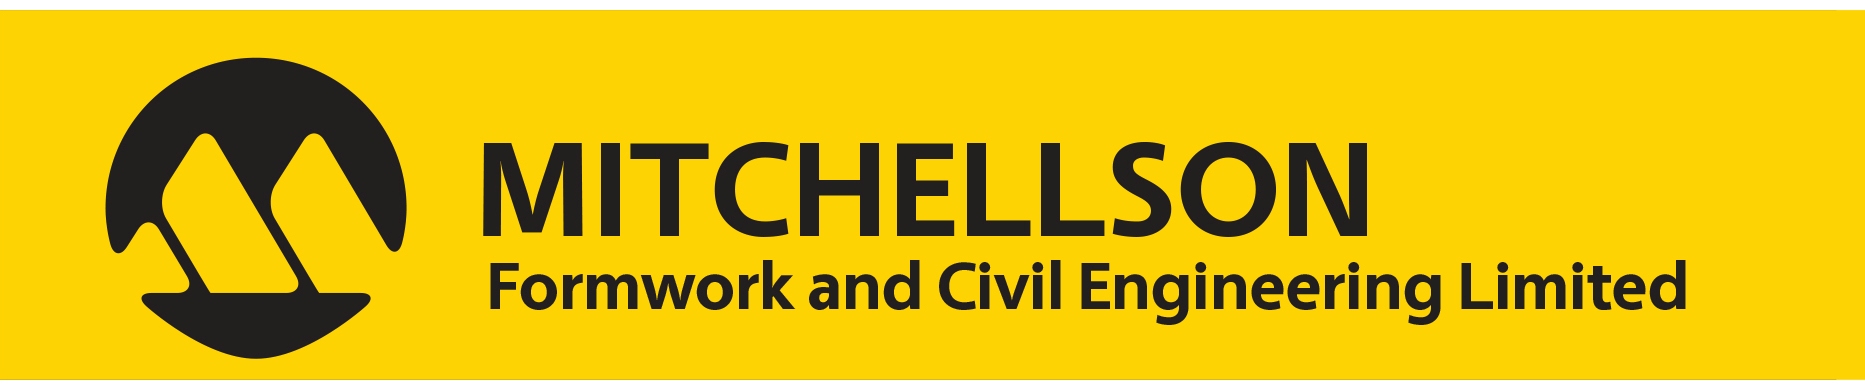 Mitchellson Formwork & Civil Engineering Limited Logo